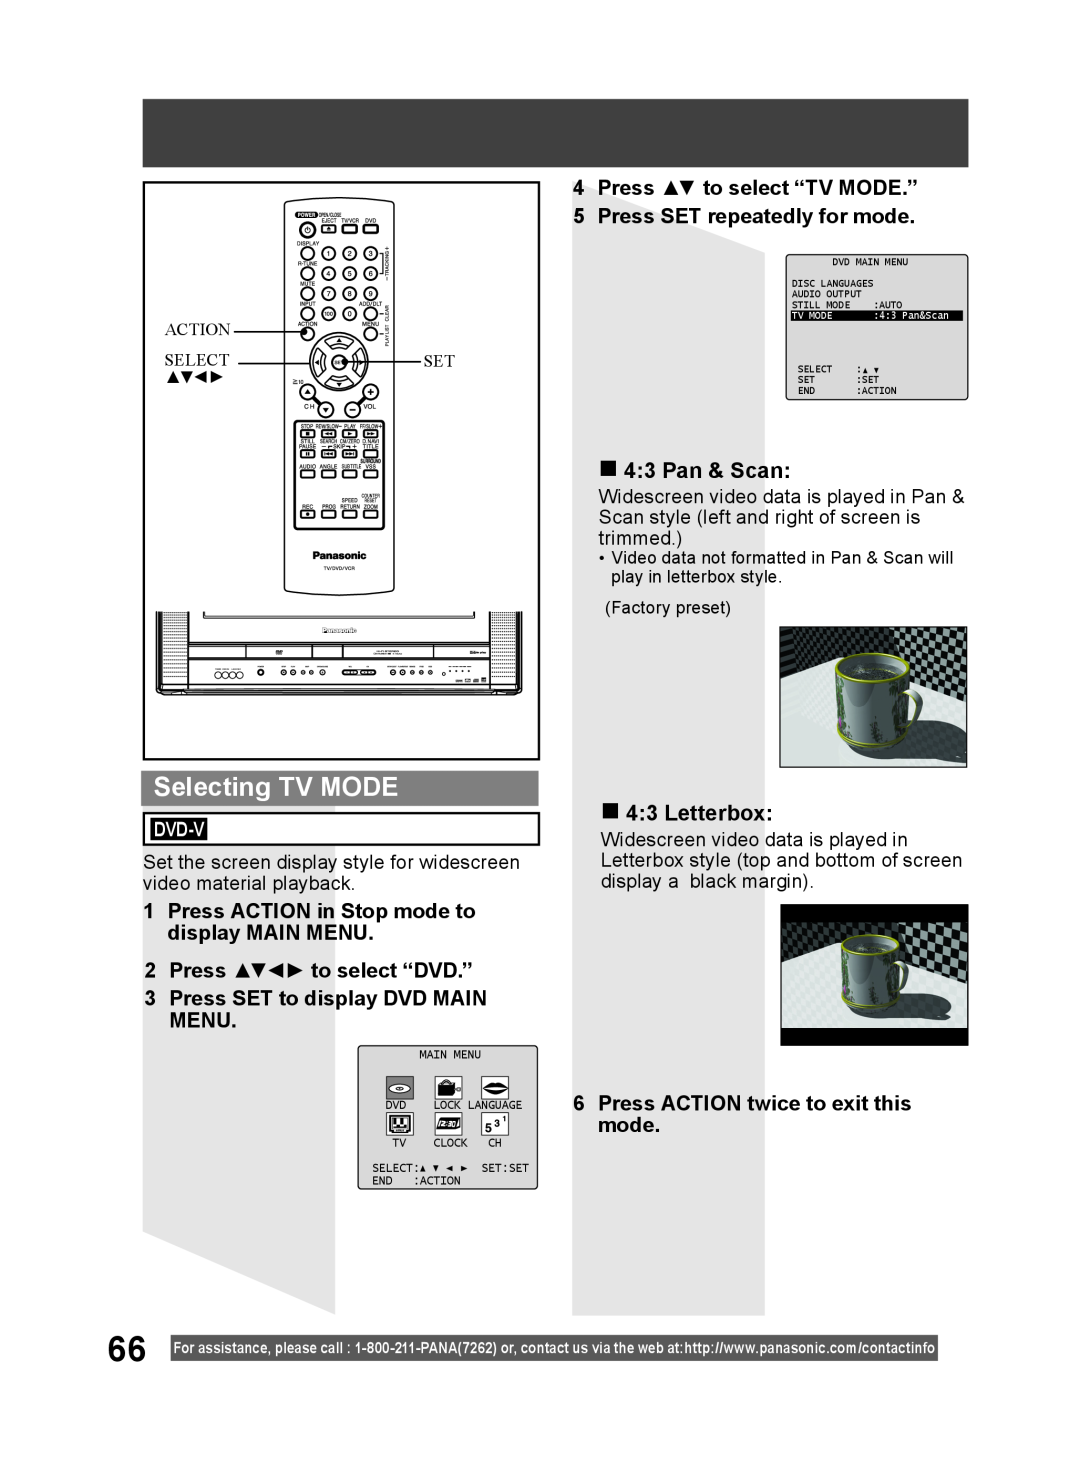 Panasonic PV DF2004, PV DF2704 Selecting TV MODE, Press ACTION in Stop mode to display MAIN MENU, Pan & Scan, Letterbox 